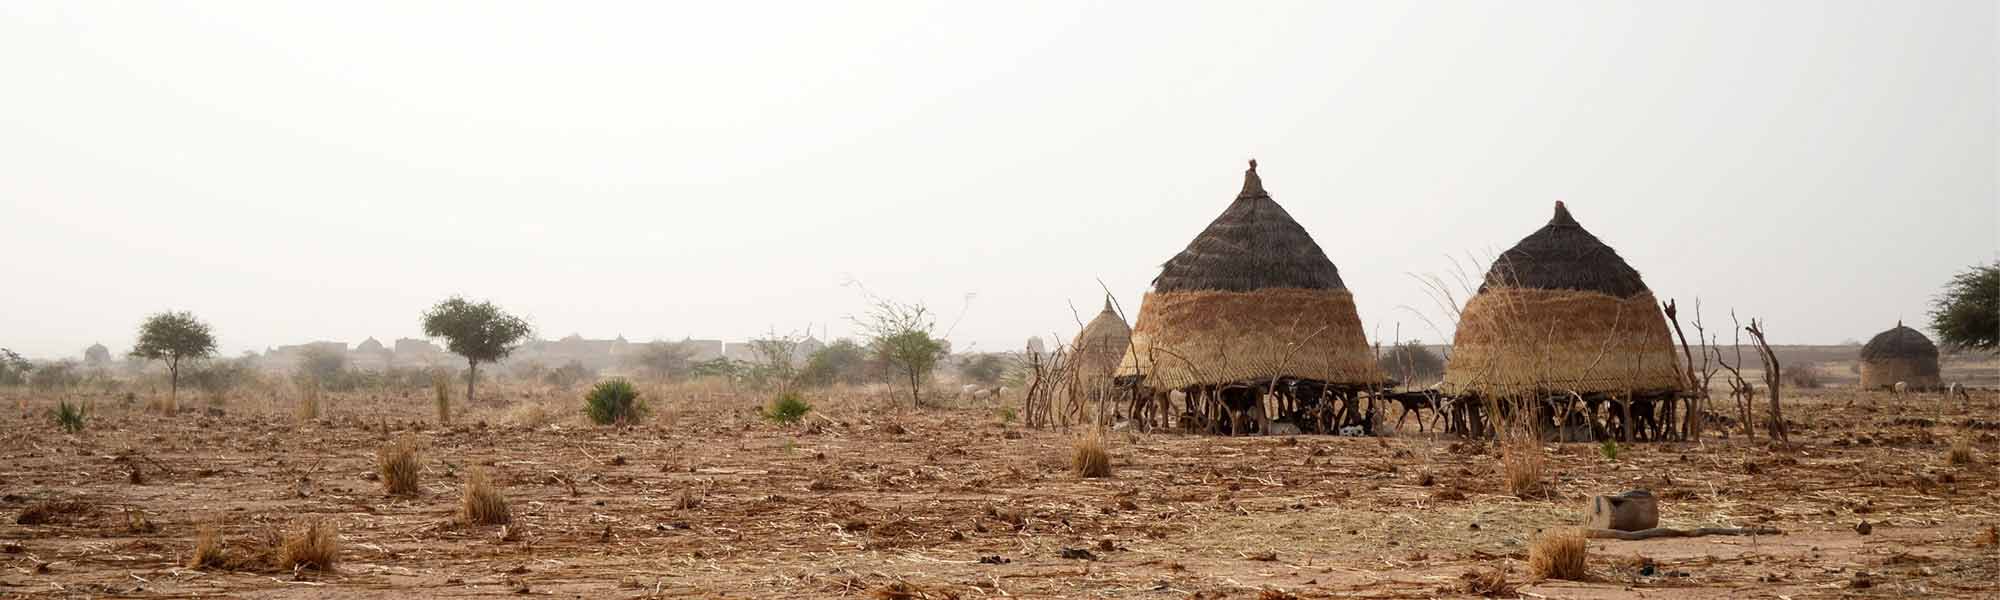 Kornmagasin i åpent landskap i Niger